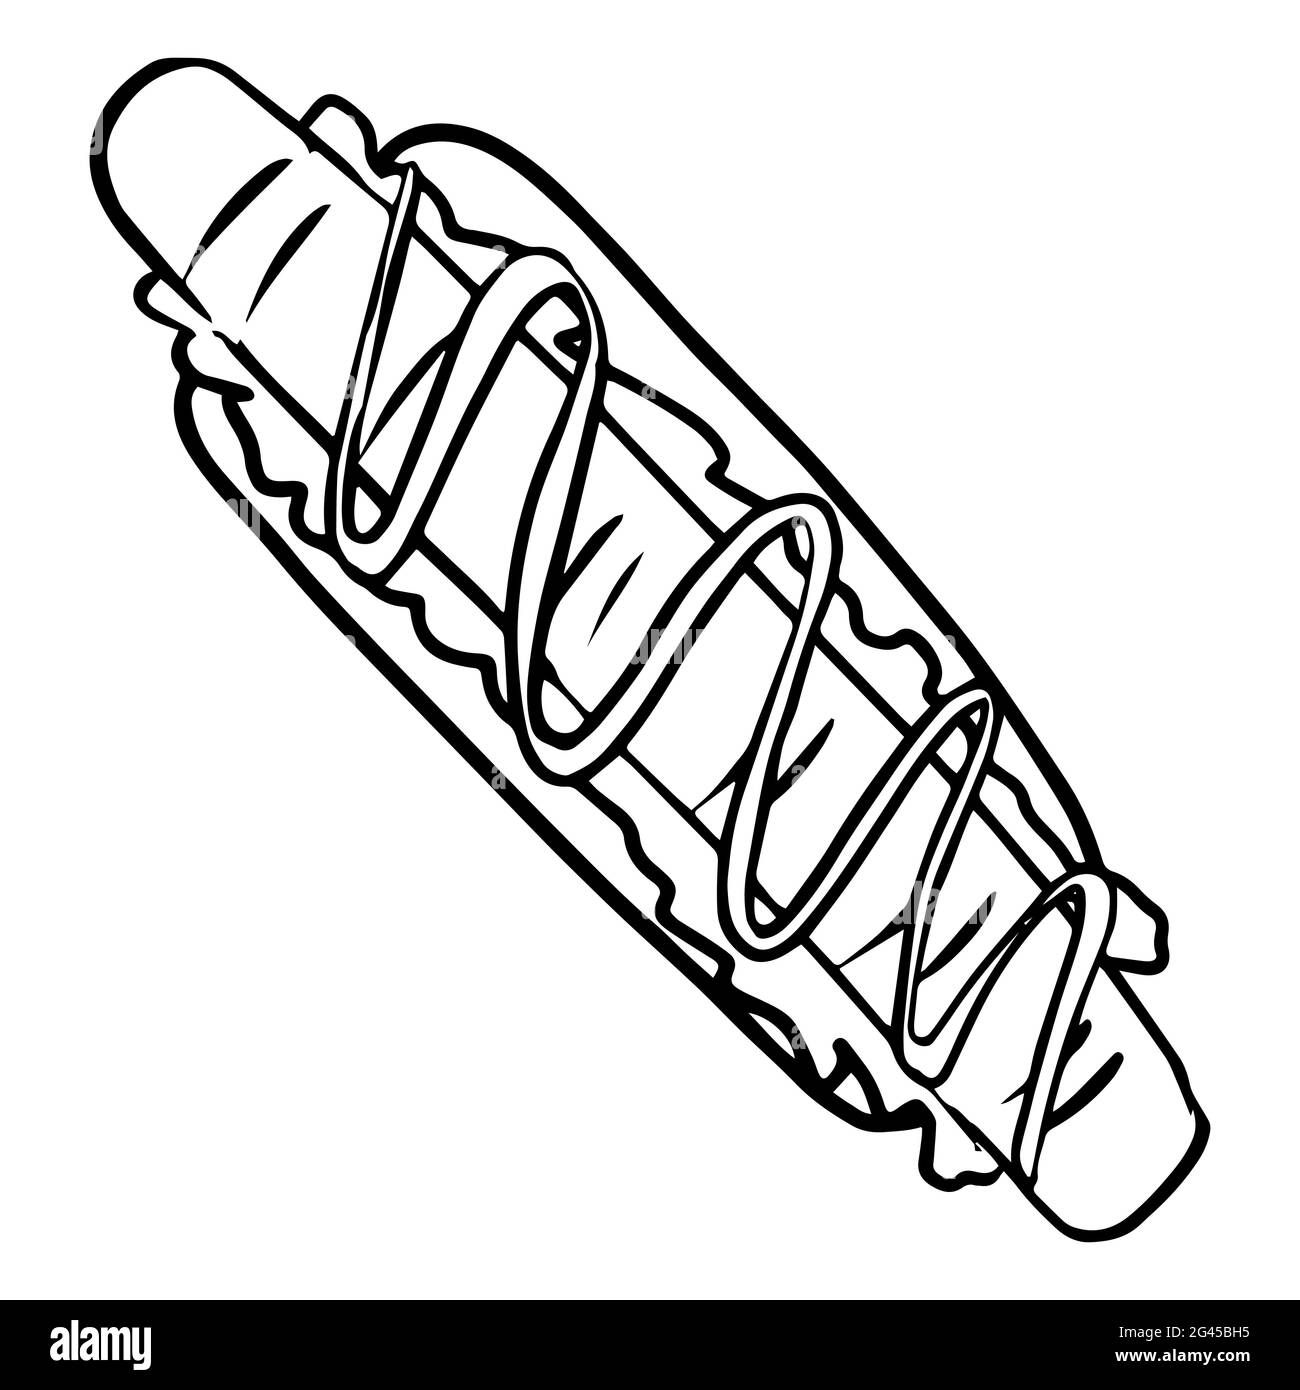 Hand drawn hotdog with mustard illustration black and white. Stock Vector